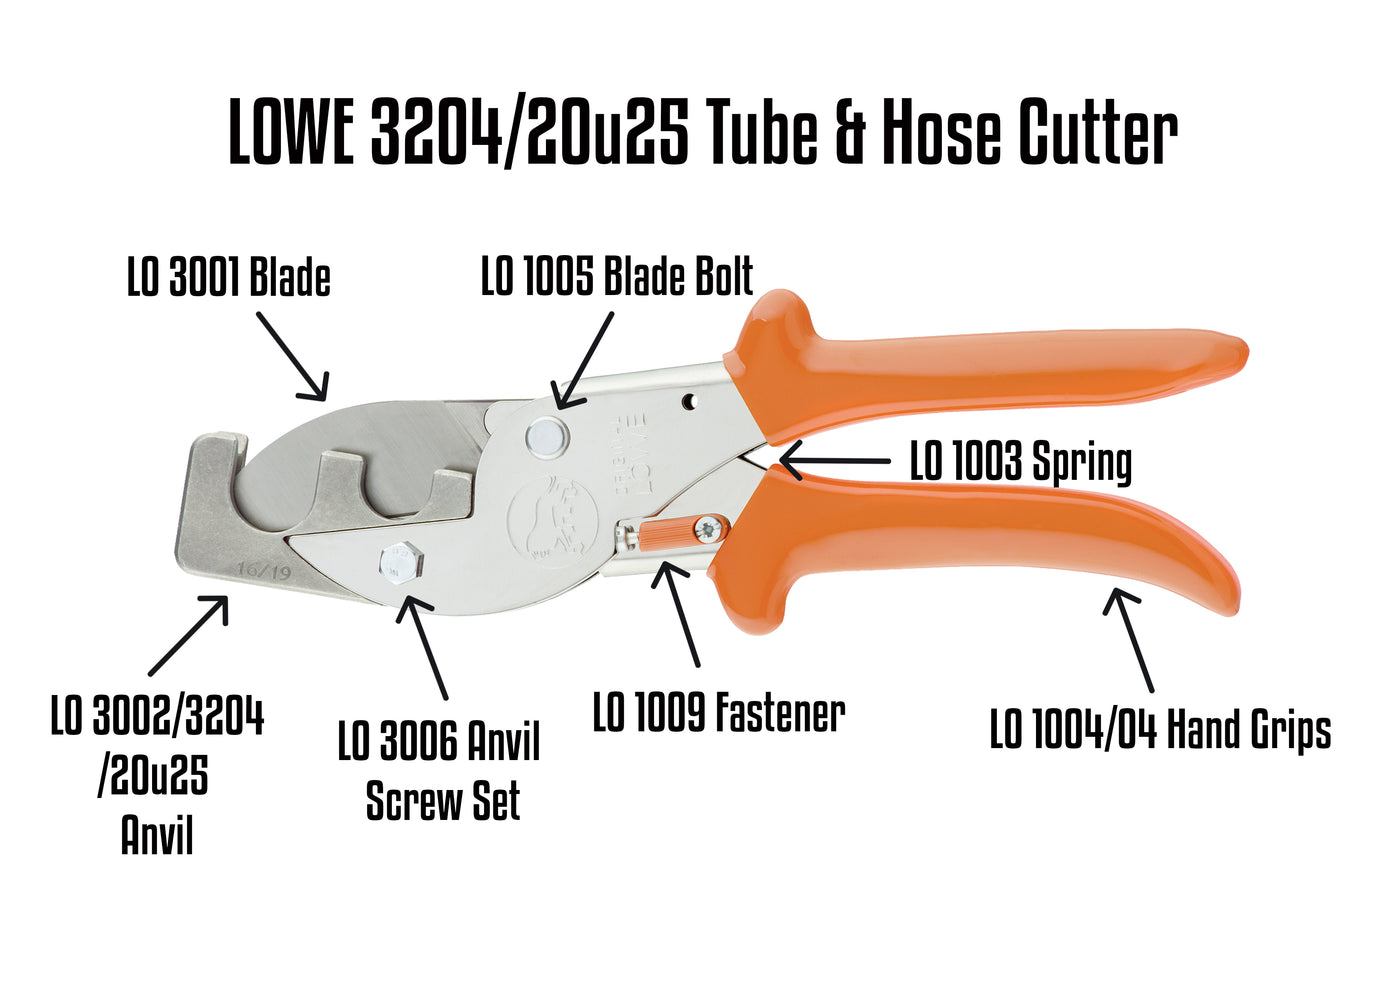 LO 3204/20u25 Tube Cutter Parts Guide